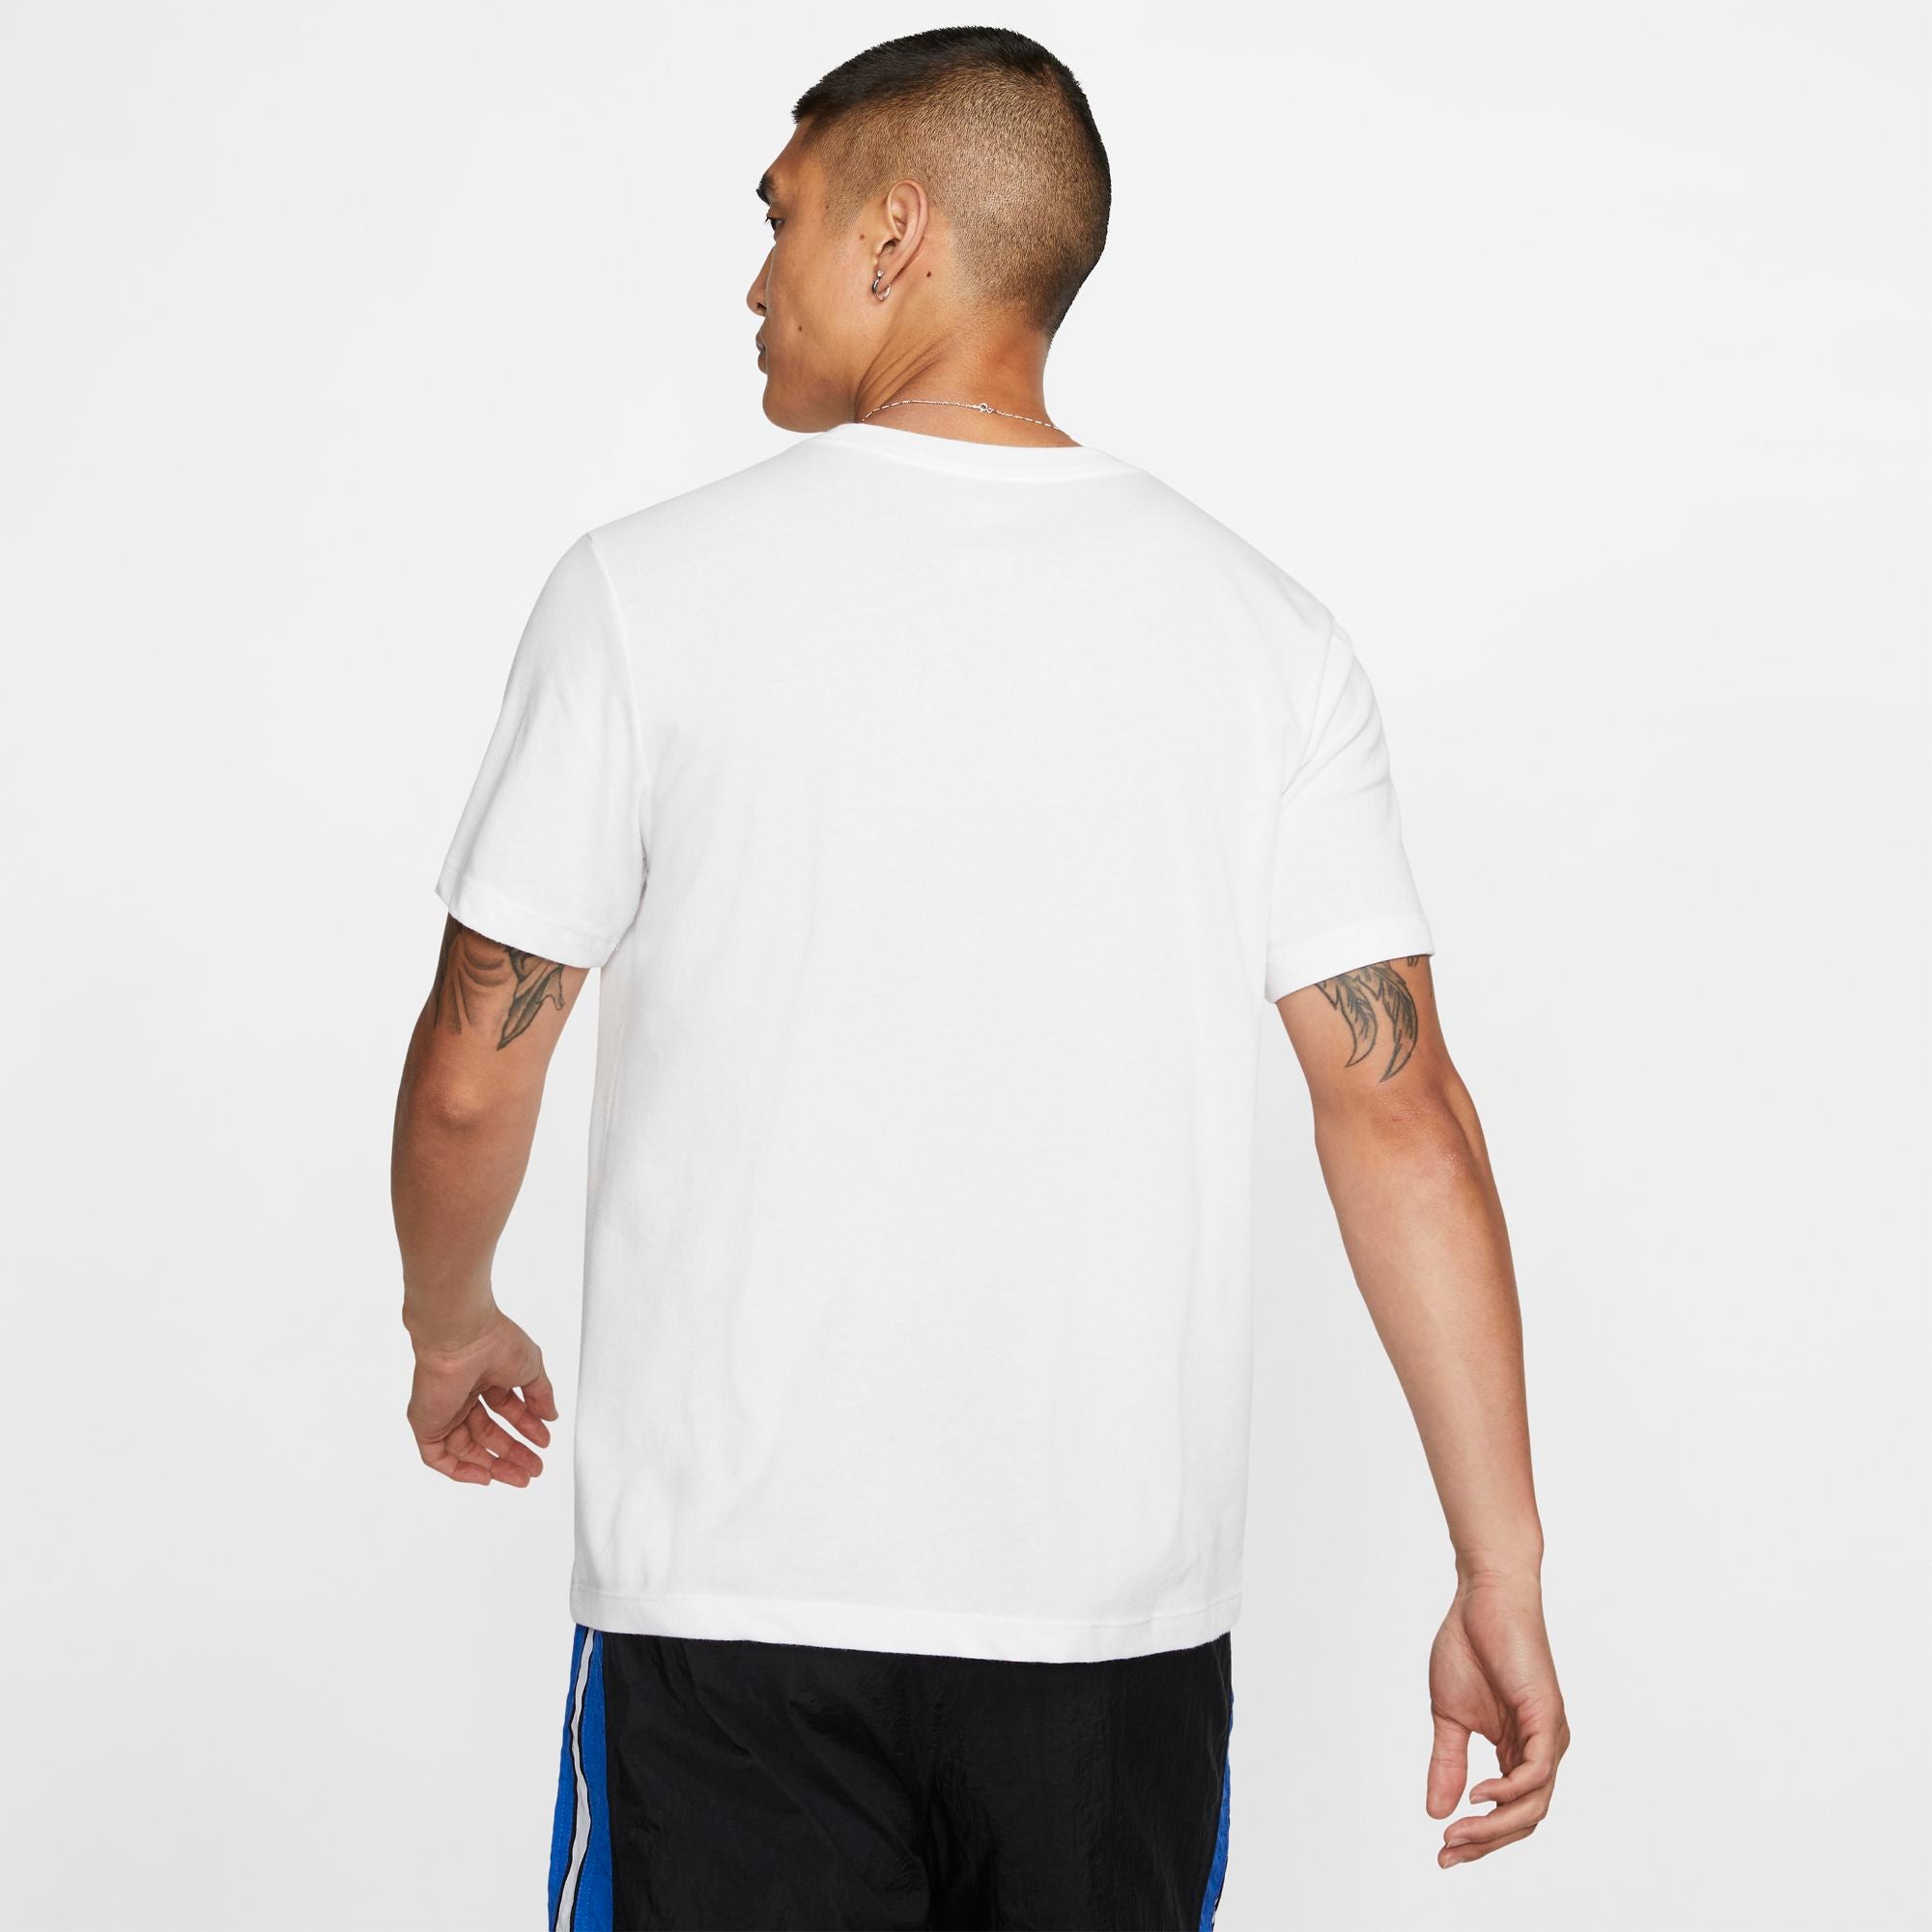 Nike PG Dri-fit Player Profile Basketball Tee - White